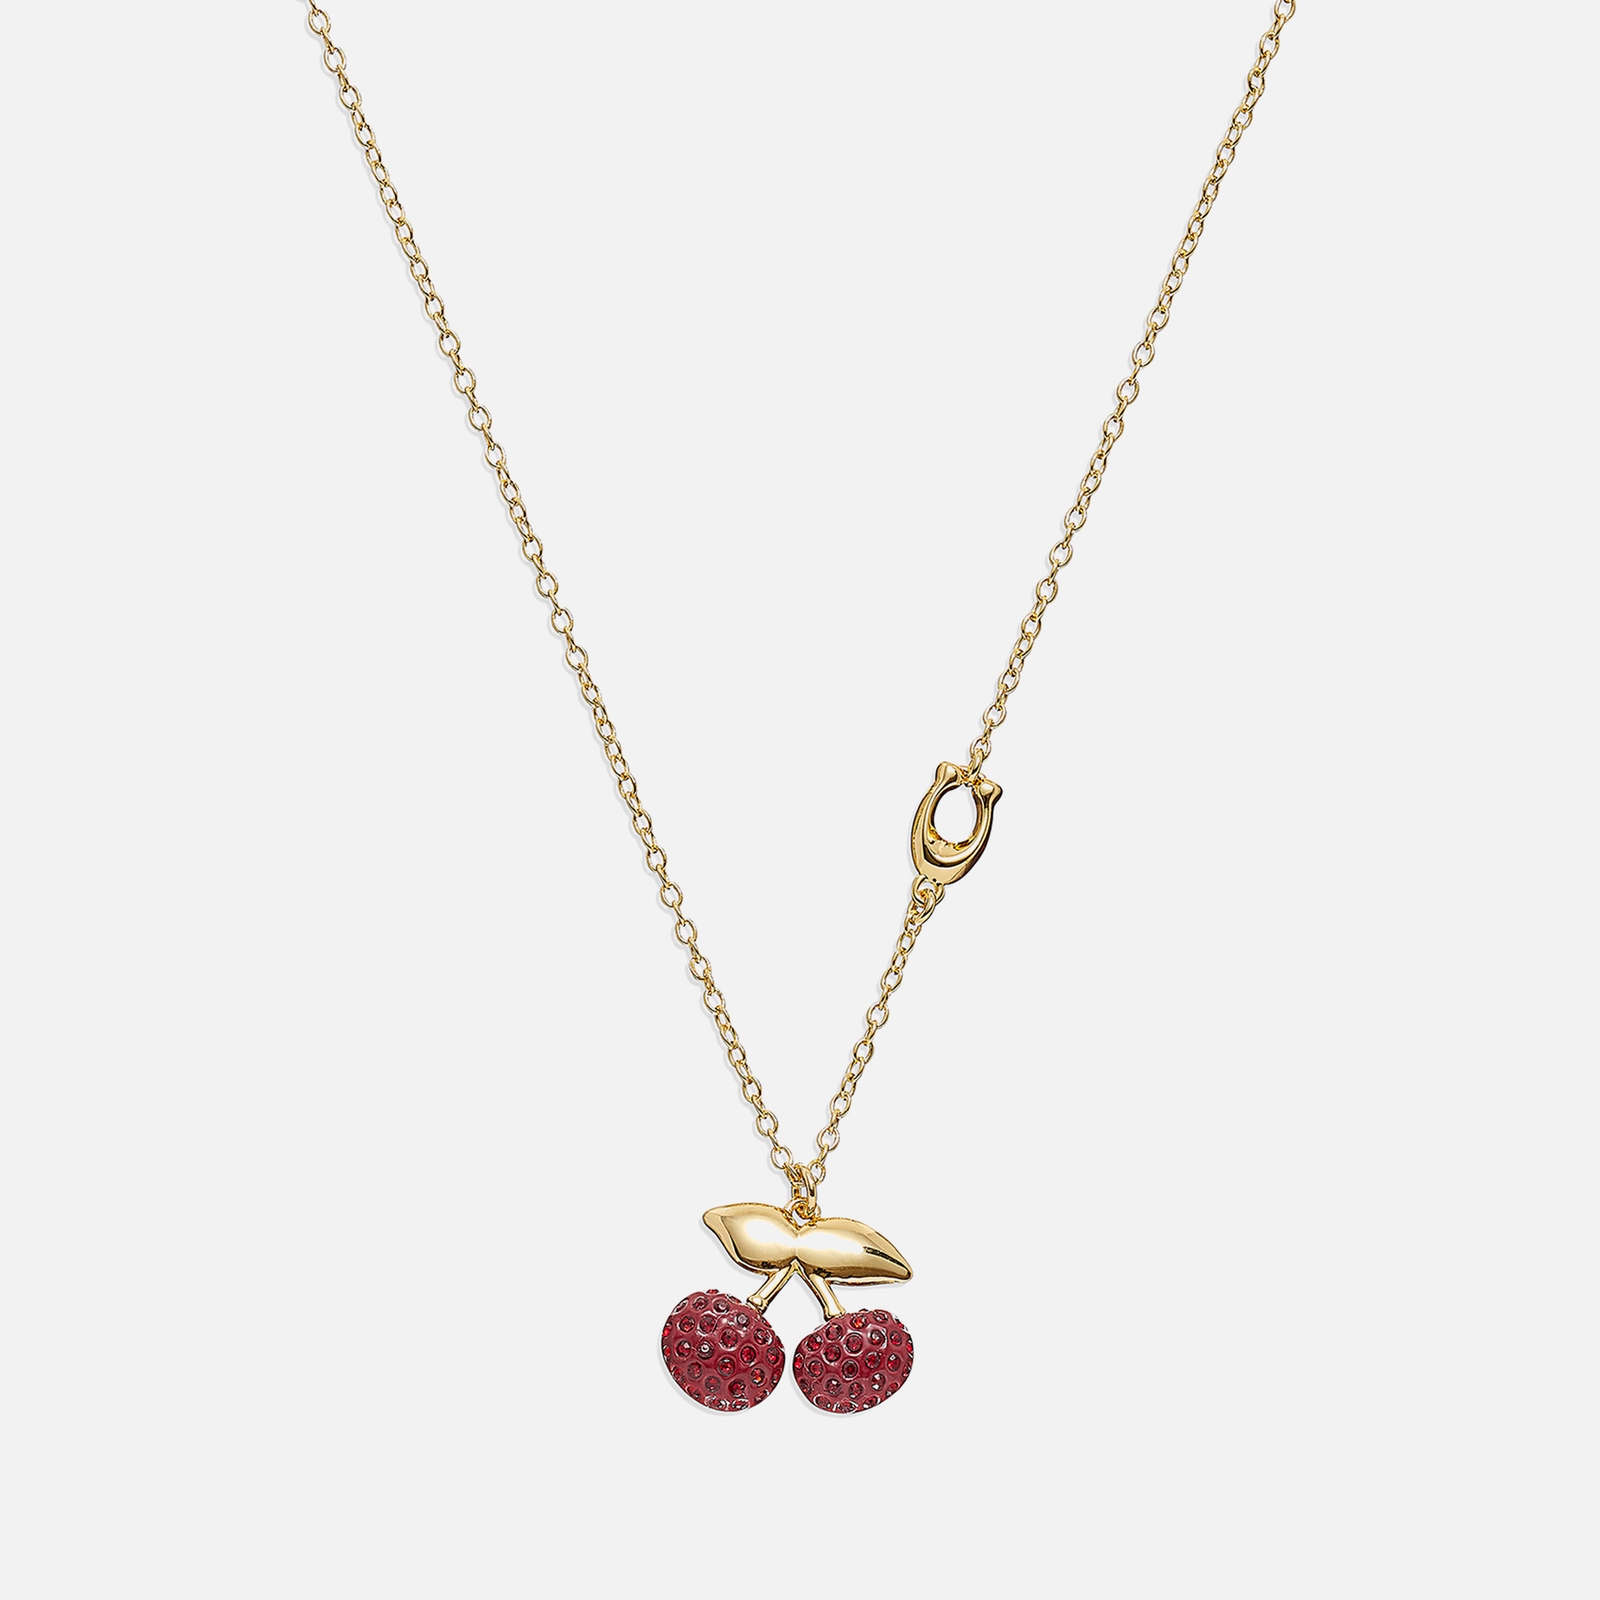 Coach Women's Cherry Pendant - Burgundy/Gold